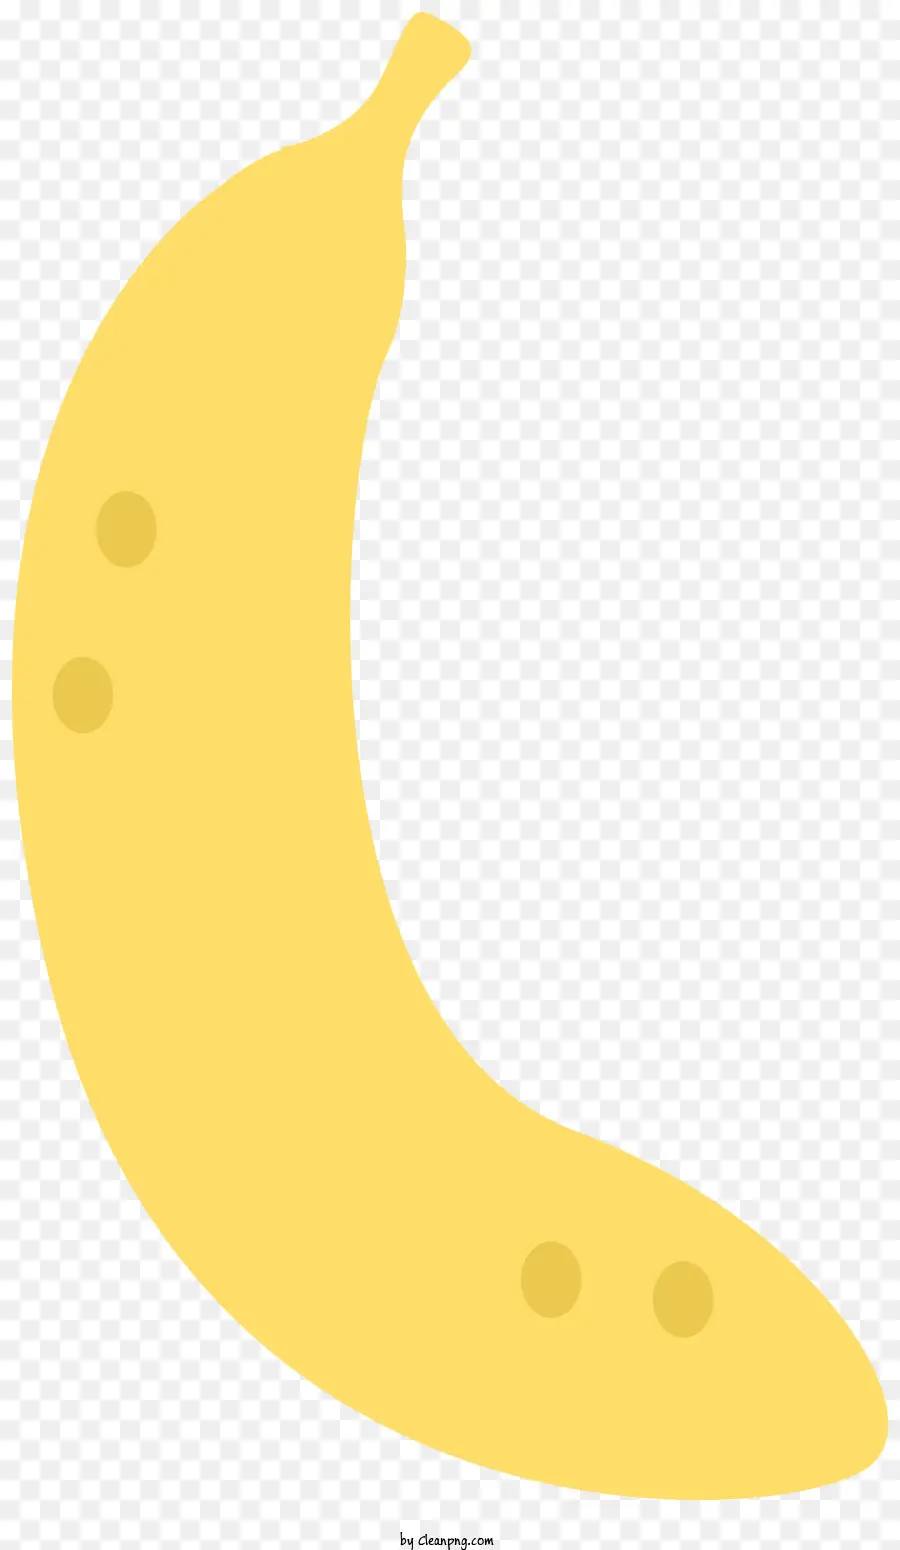 Banana Tropical Fruit Giallo Banana Curve Banana Ricette di banana - Frutta gialla e curva usata in piatti e dessert